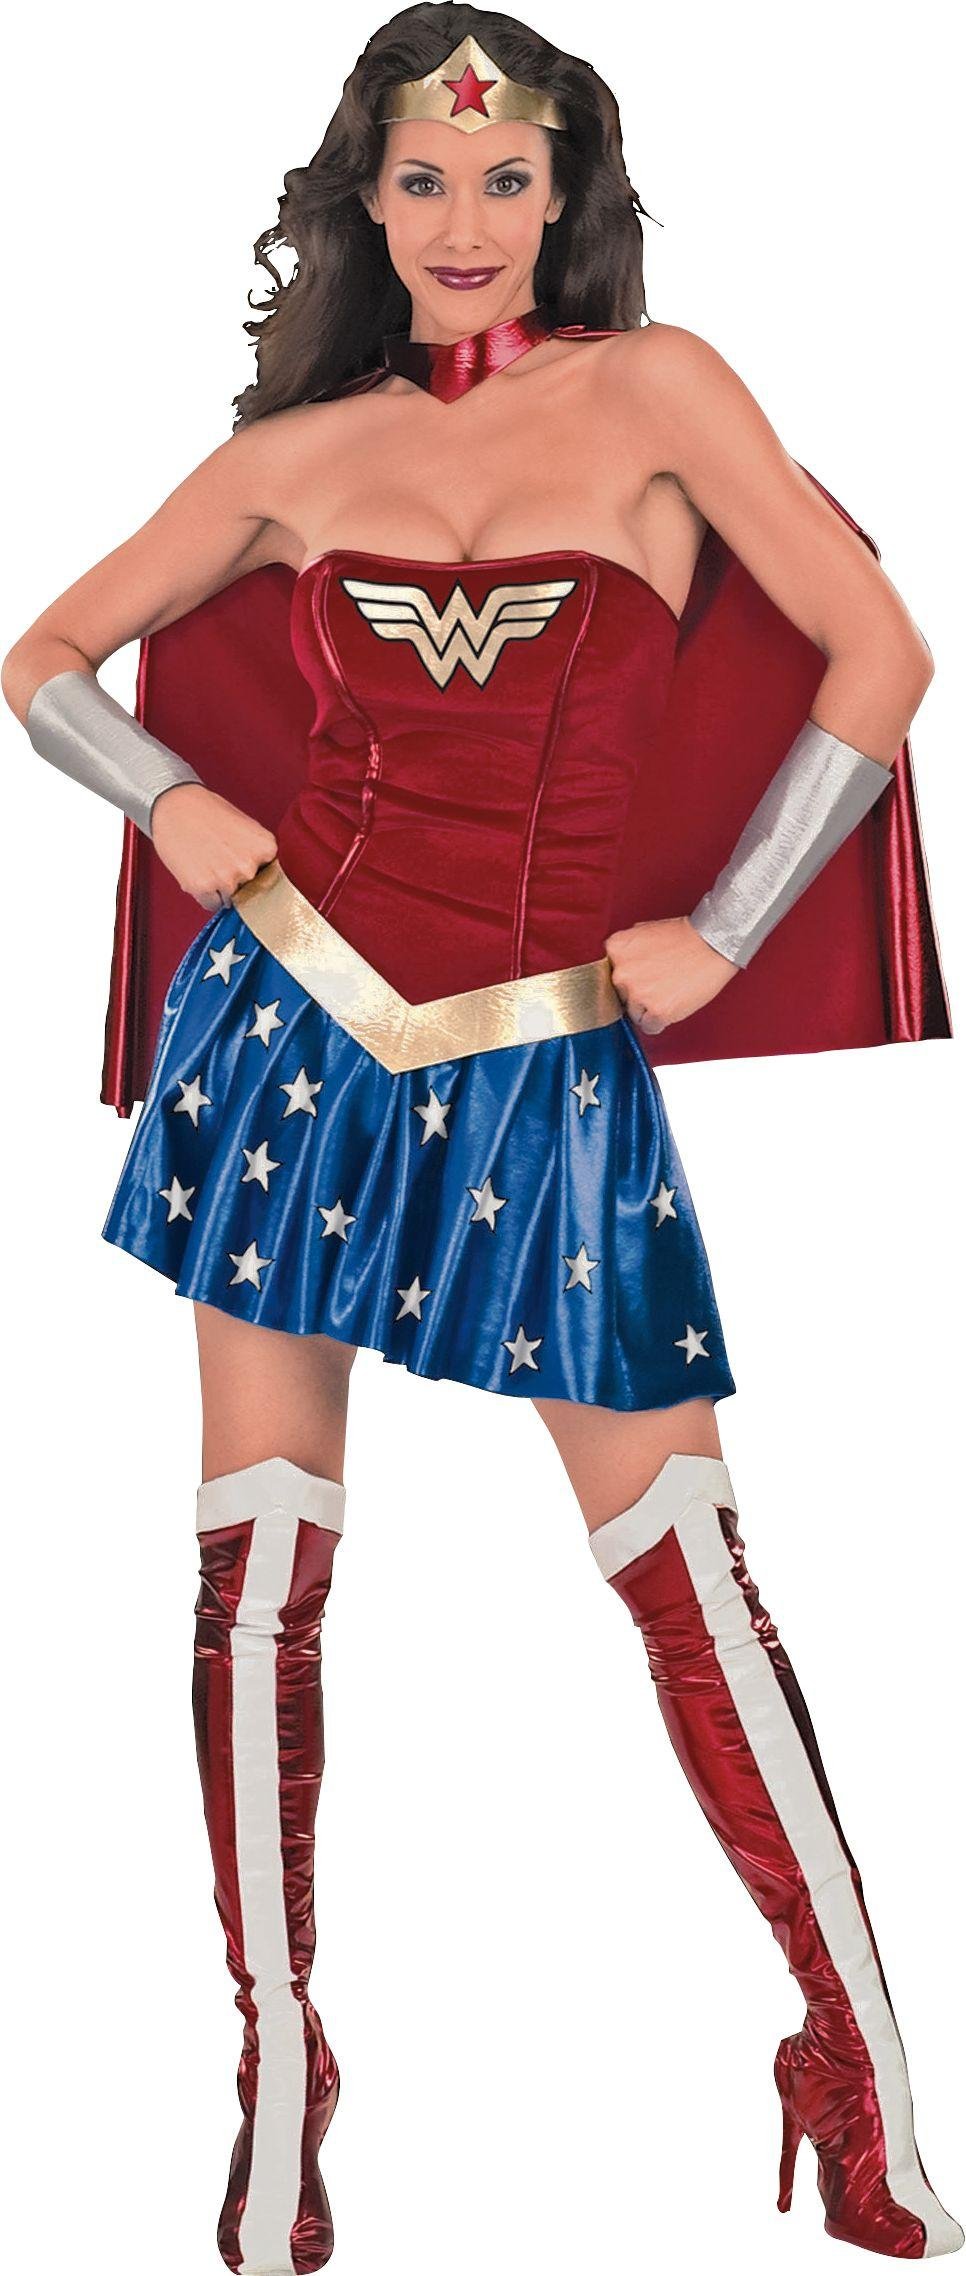 Women's Wonderwoman Costume Size 10-12 Review